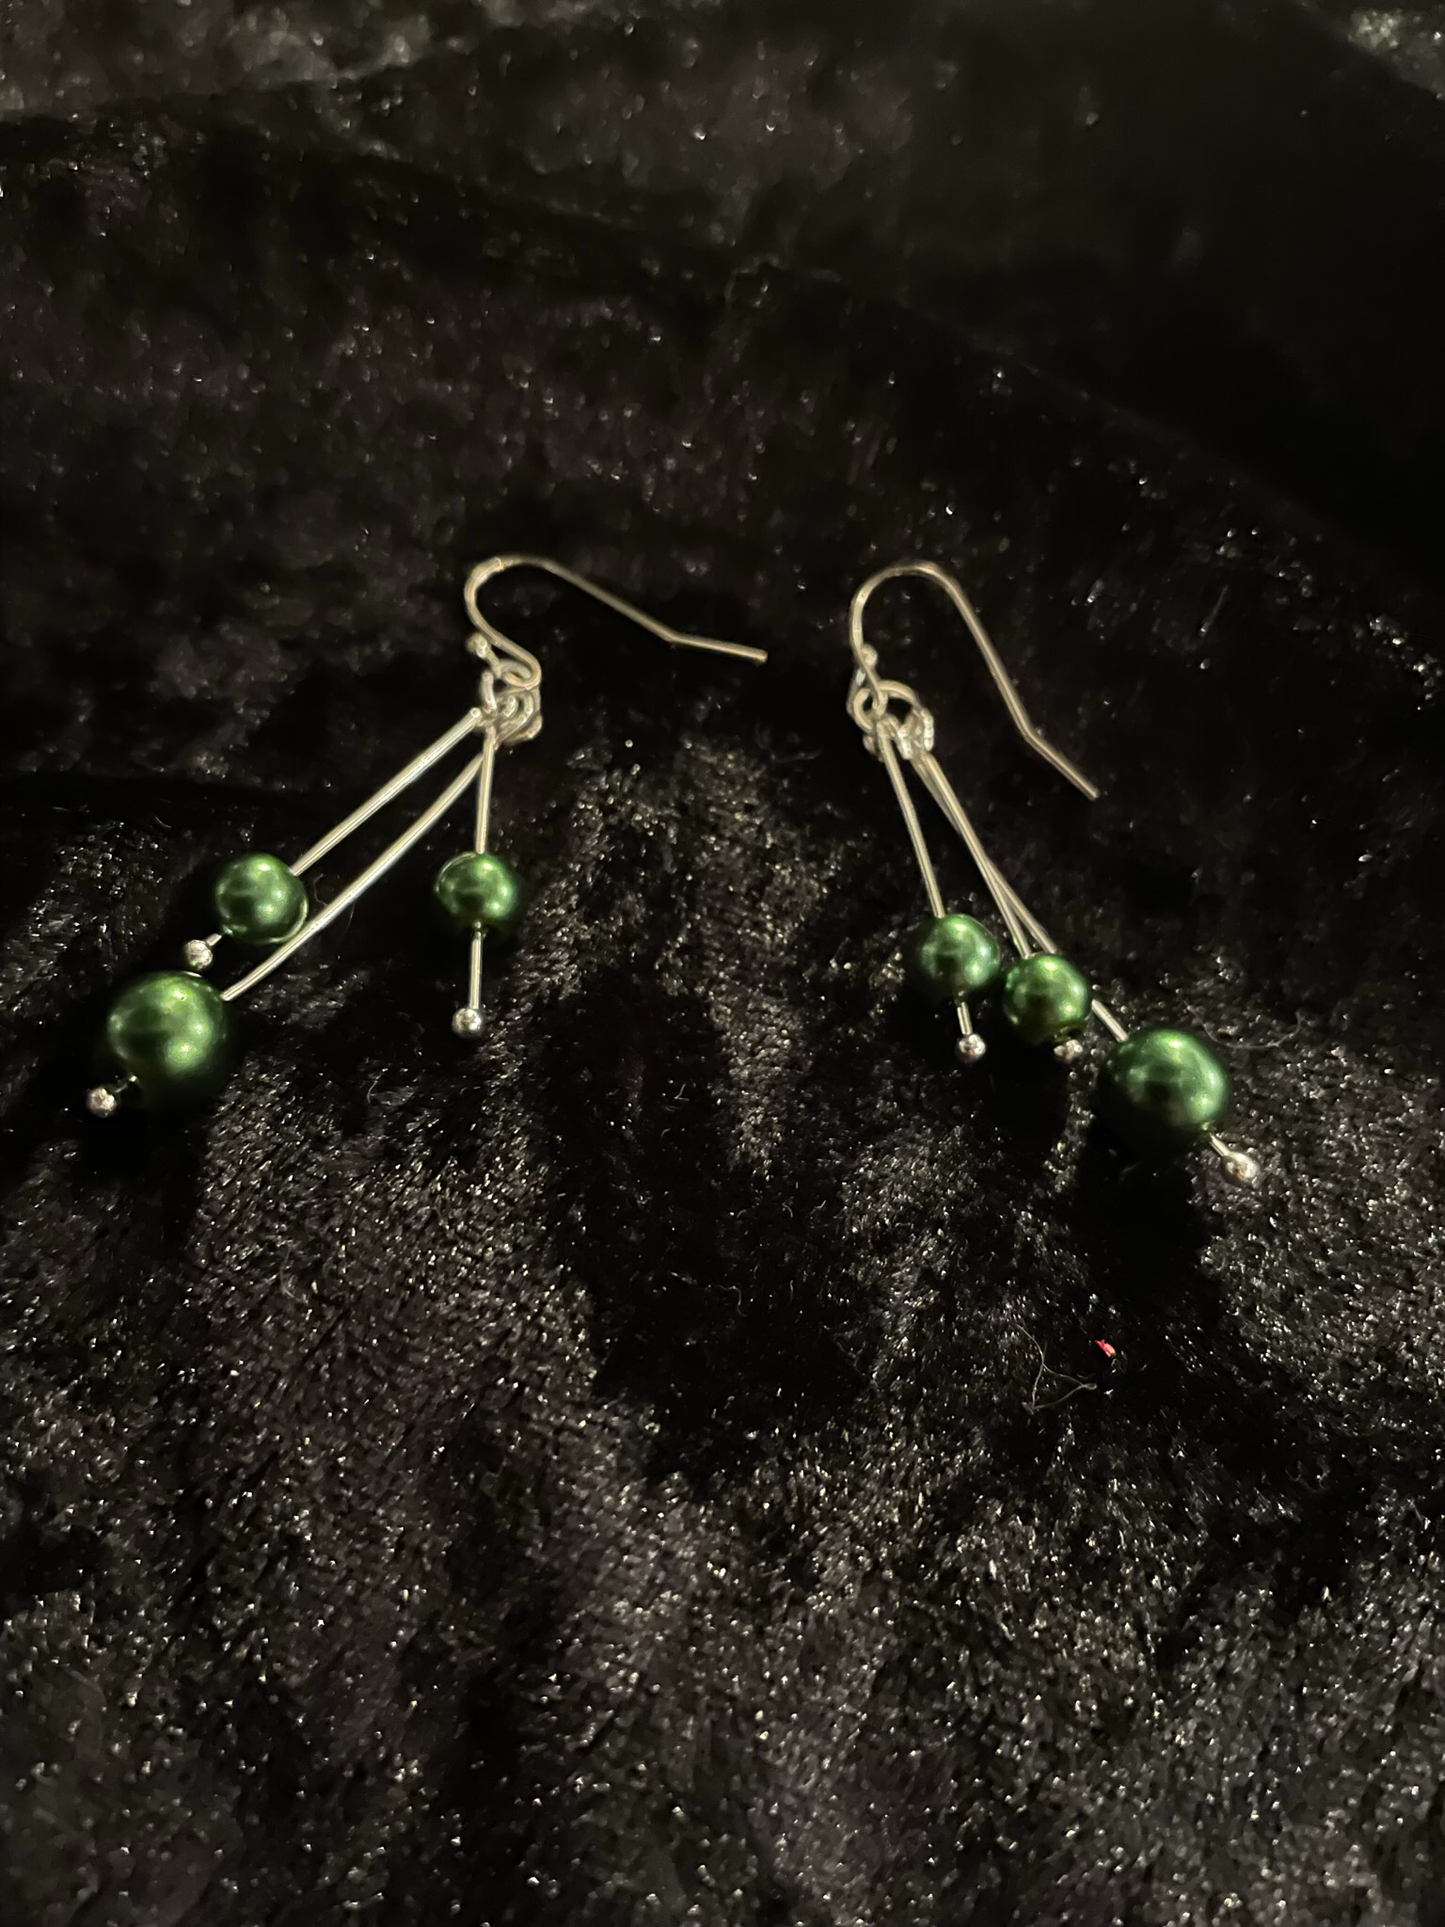 Festive drop earrings with beads